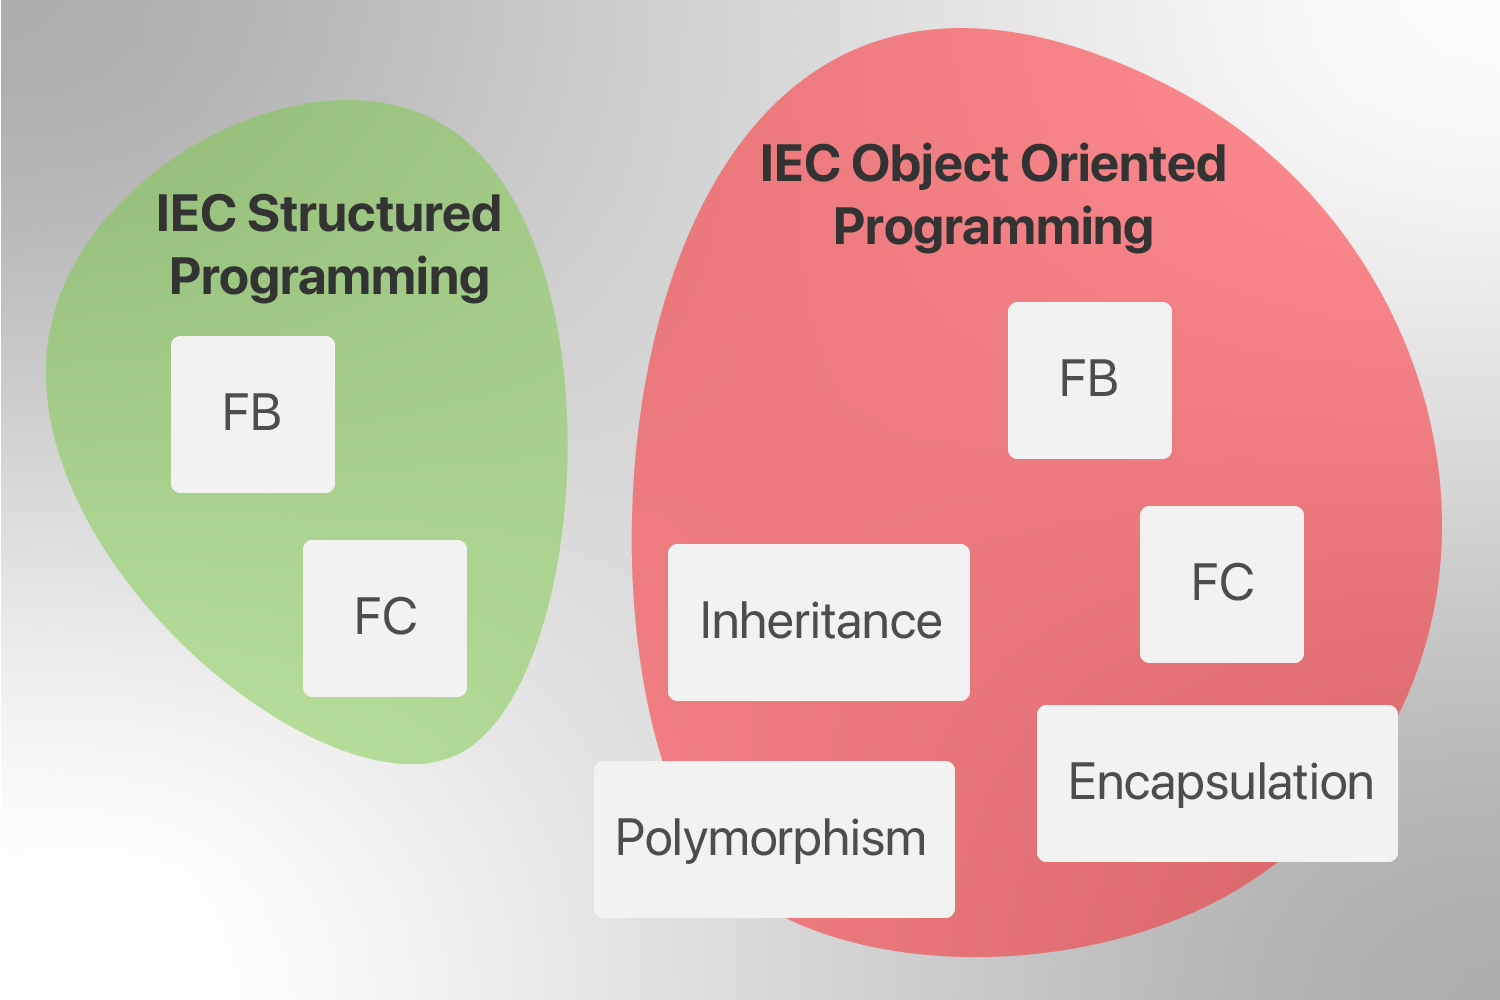 IEC Procedural vs Object Oriented Programming